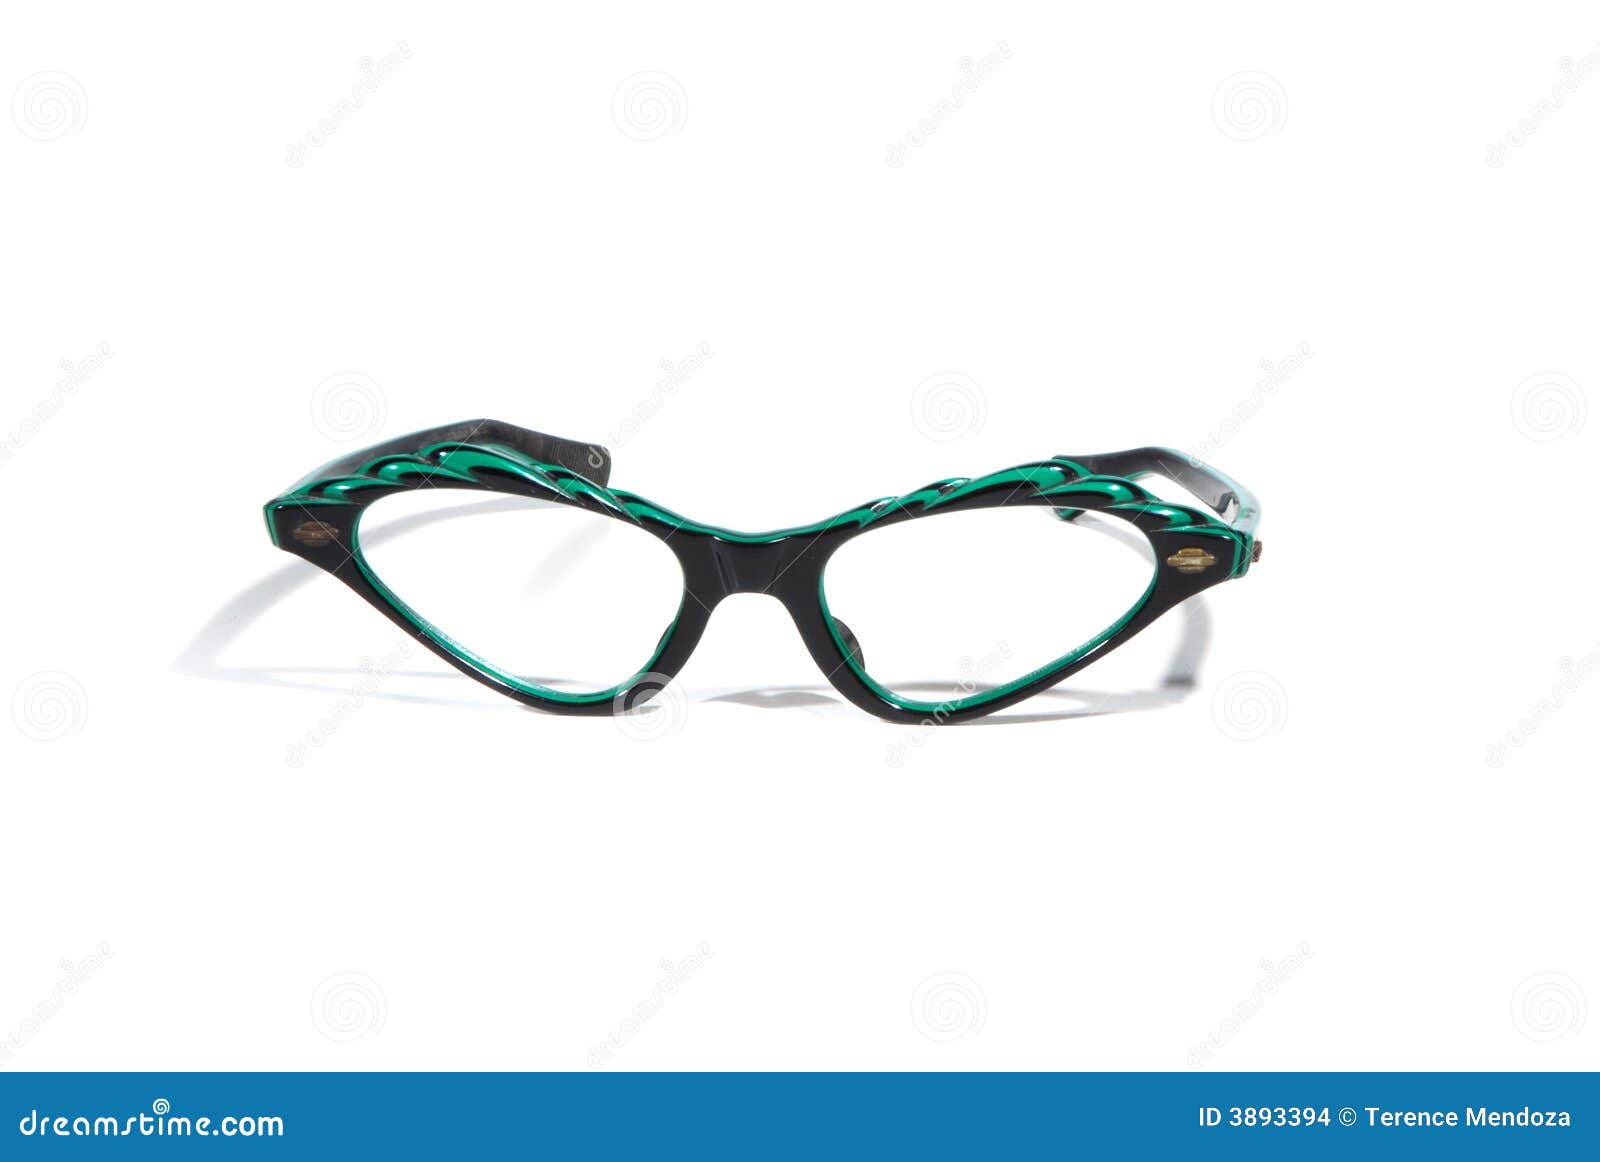 fifties eyeglasses